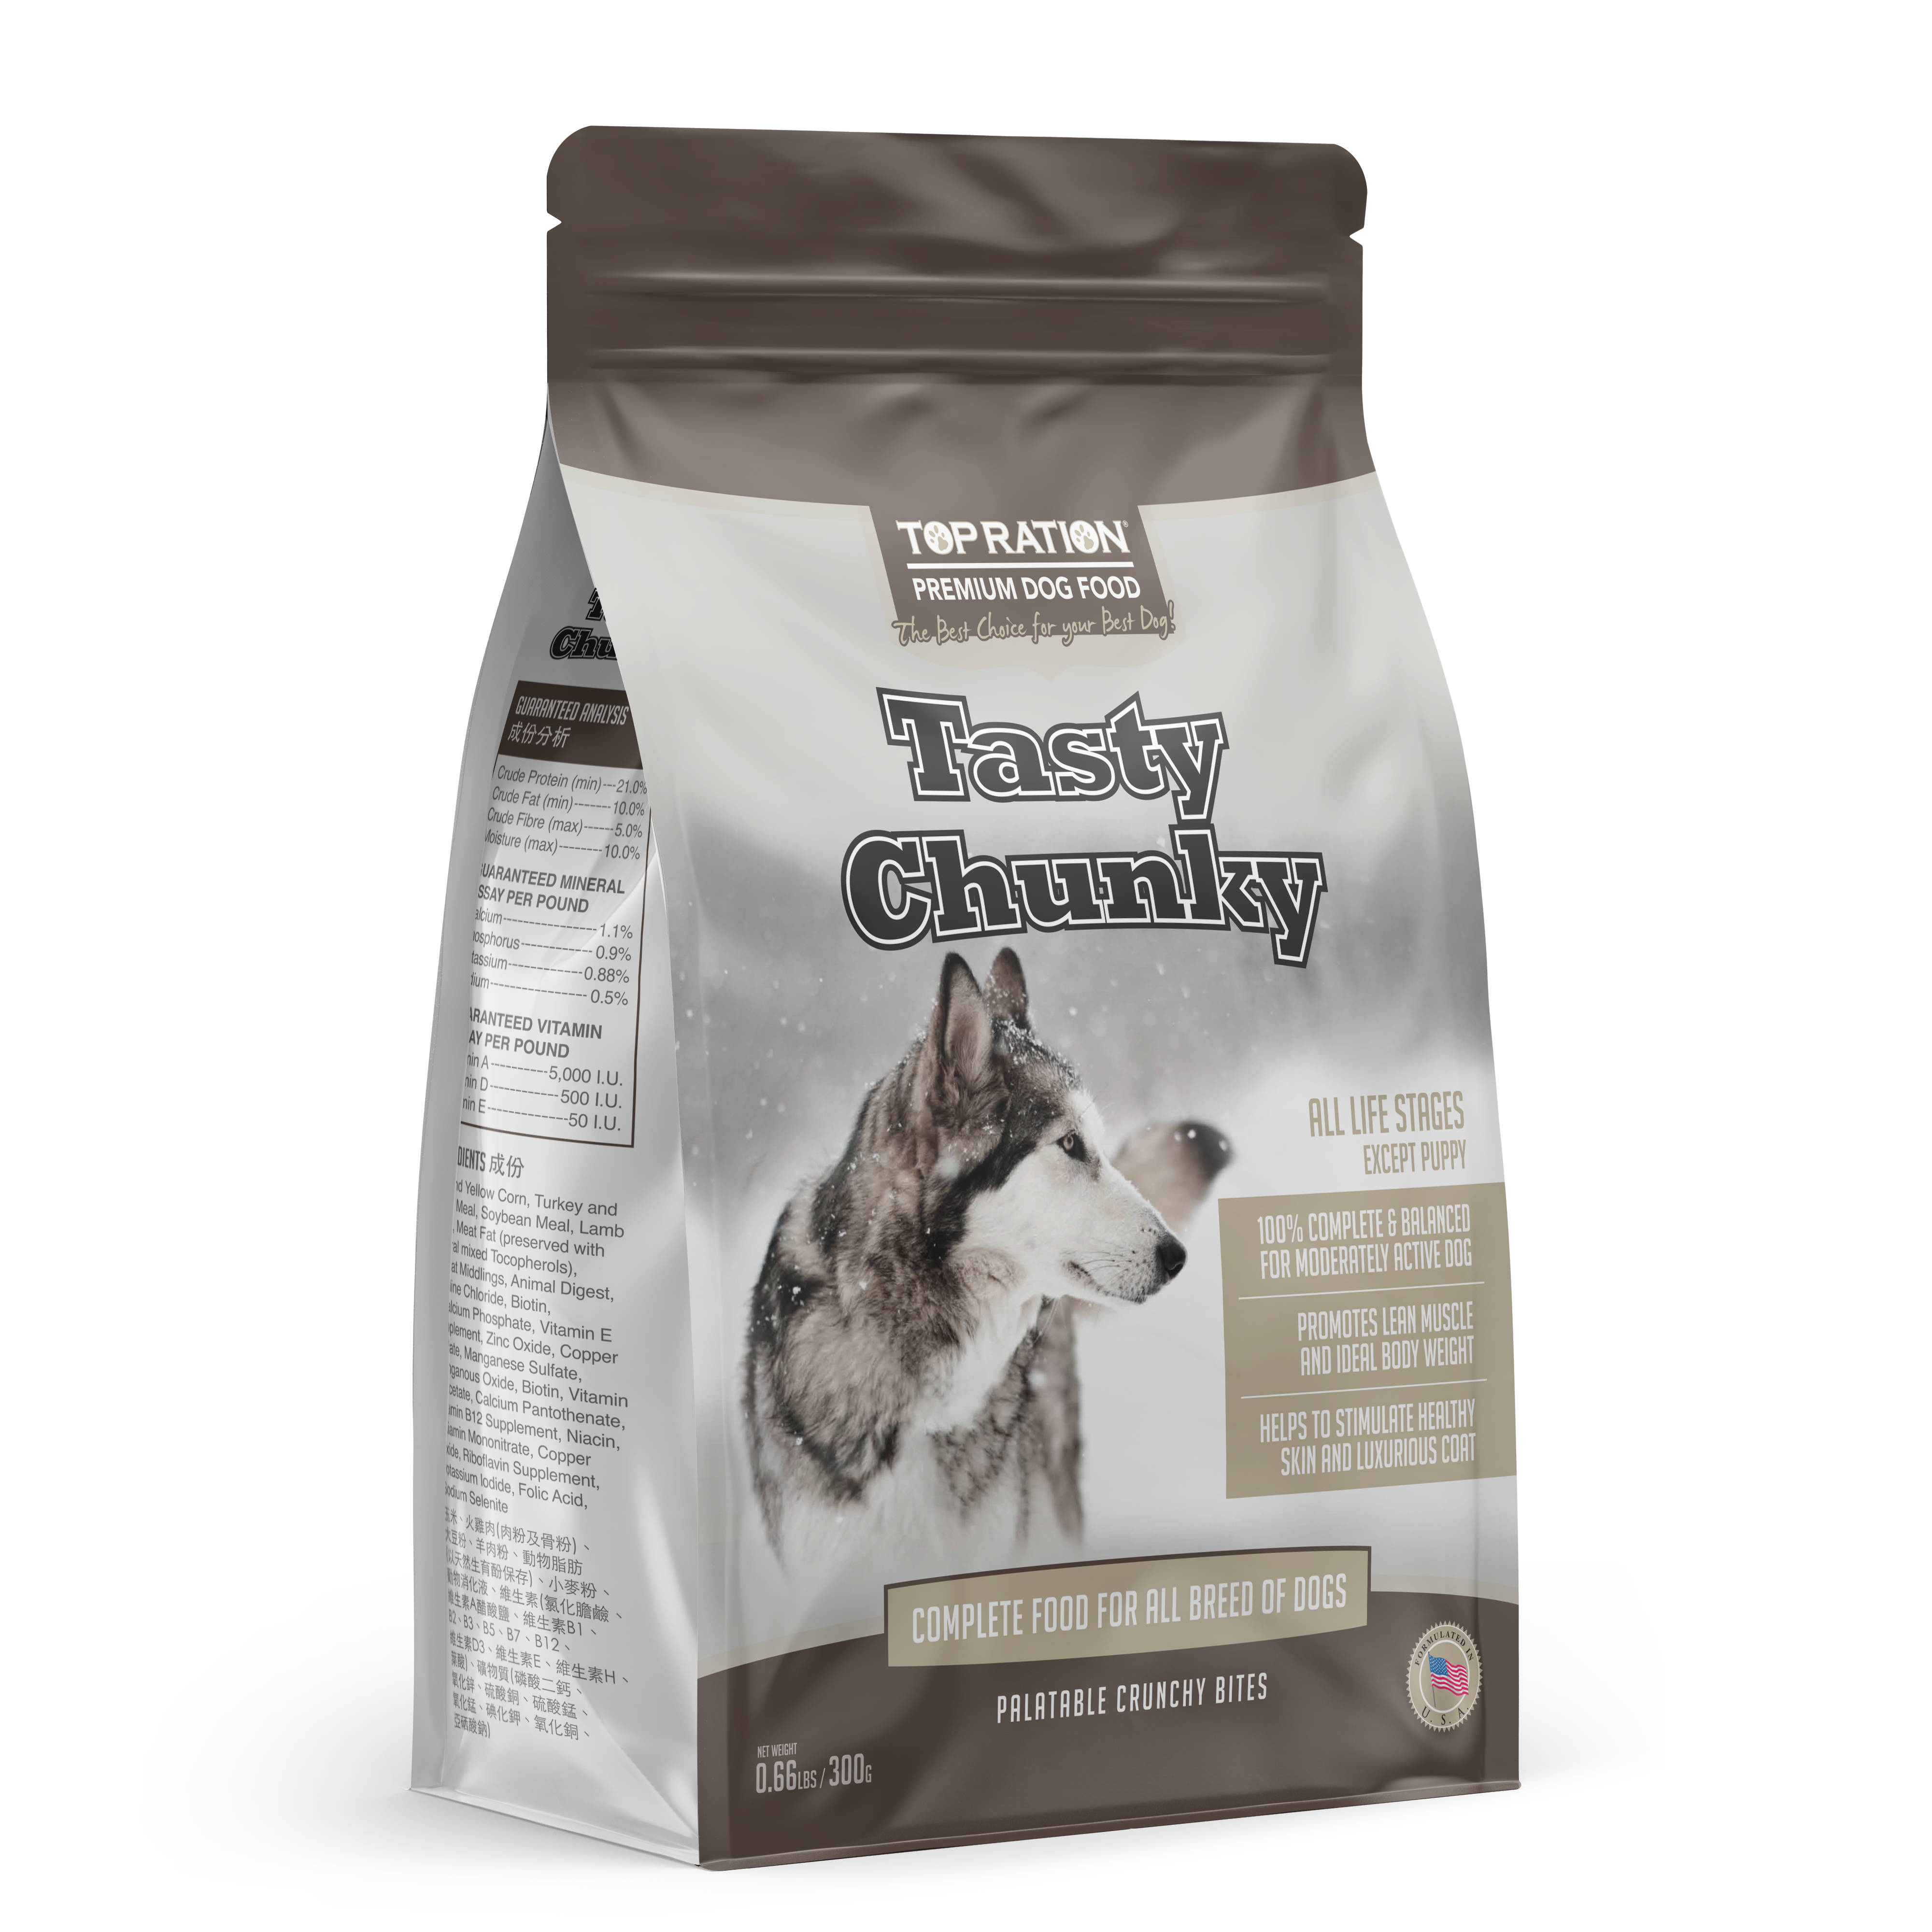 Top Ration Premium Dry Dog Food (Tasty Chunky)